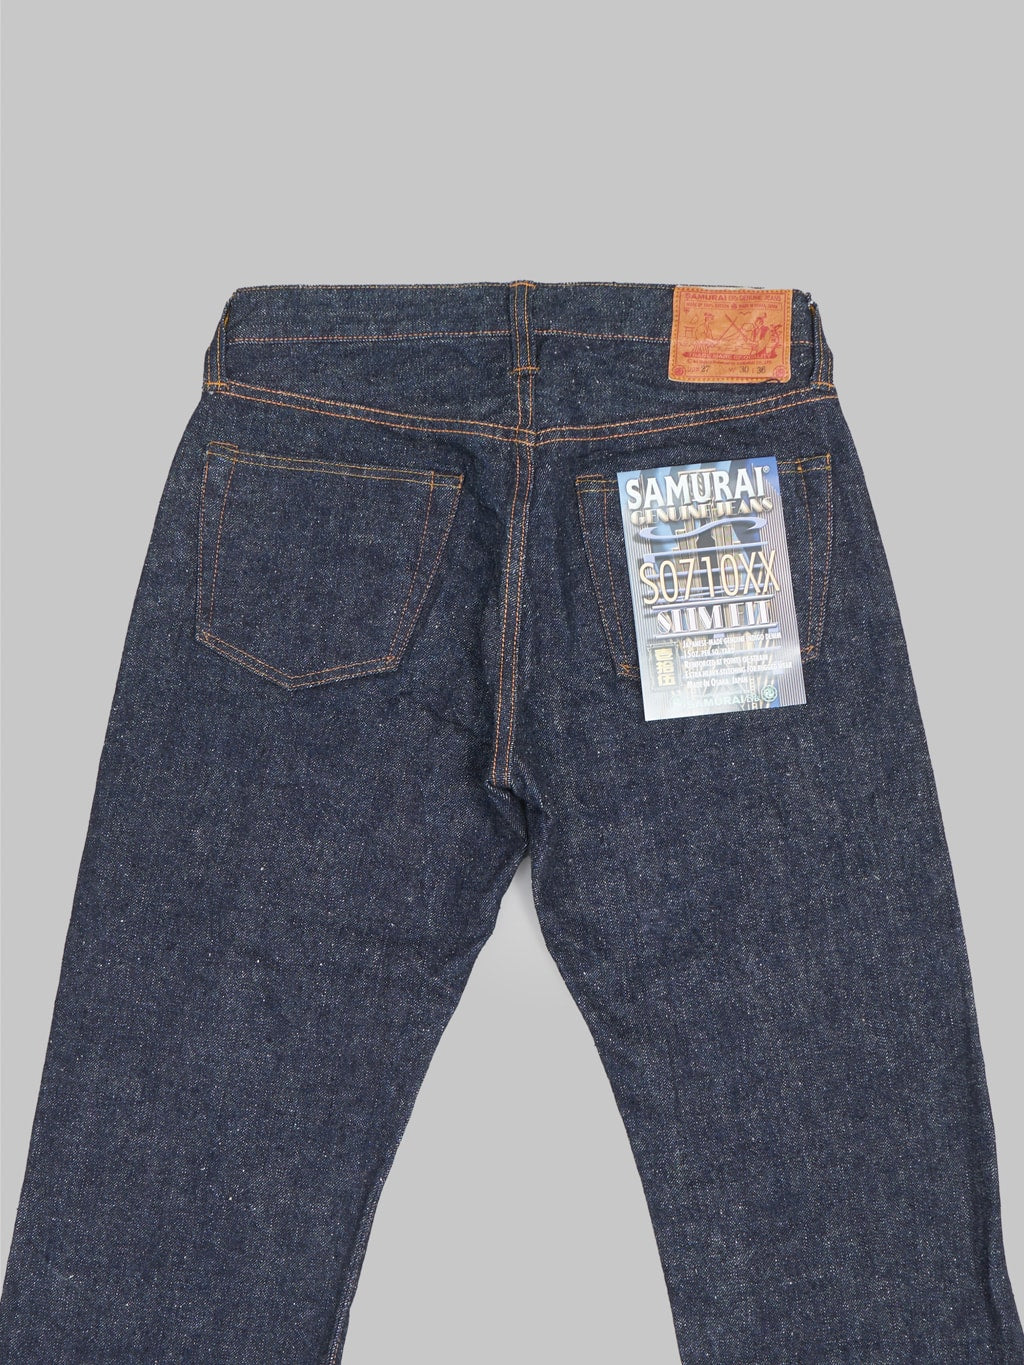 Samurai Jeans S0710XX "Otokogi" 15oz Slim Straight Jeans